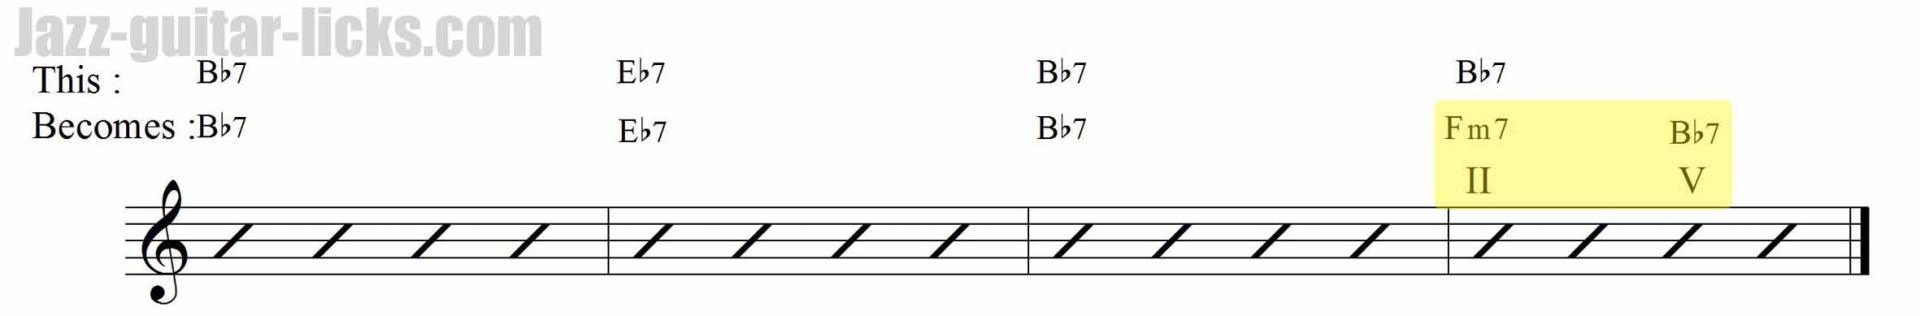 II V chord substitution 1